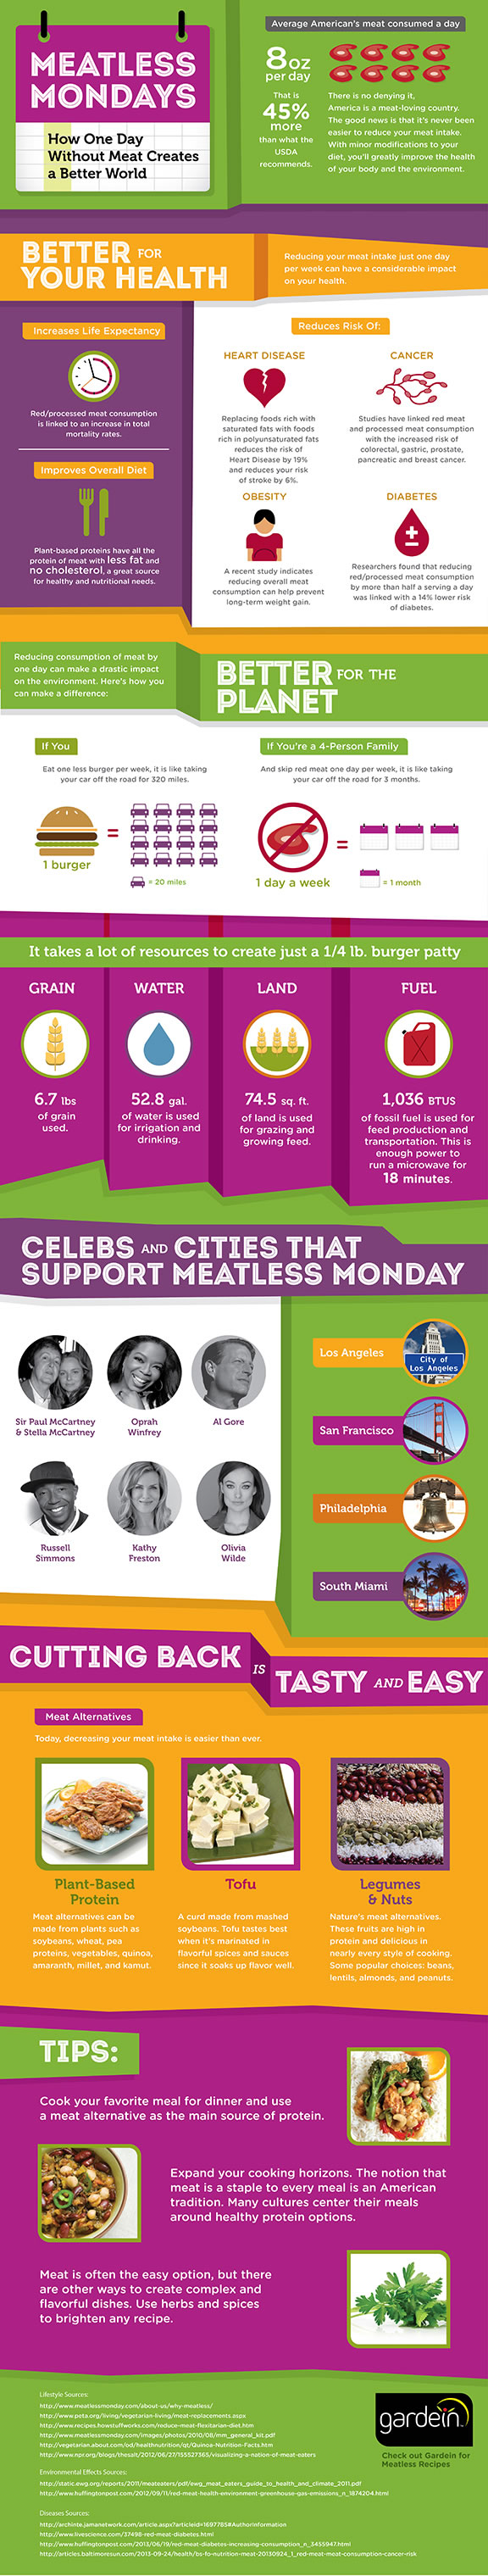 Gardein Meatless Monday Infographic